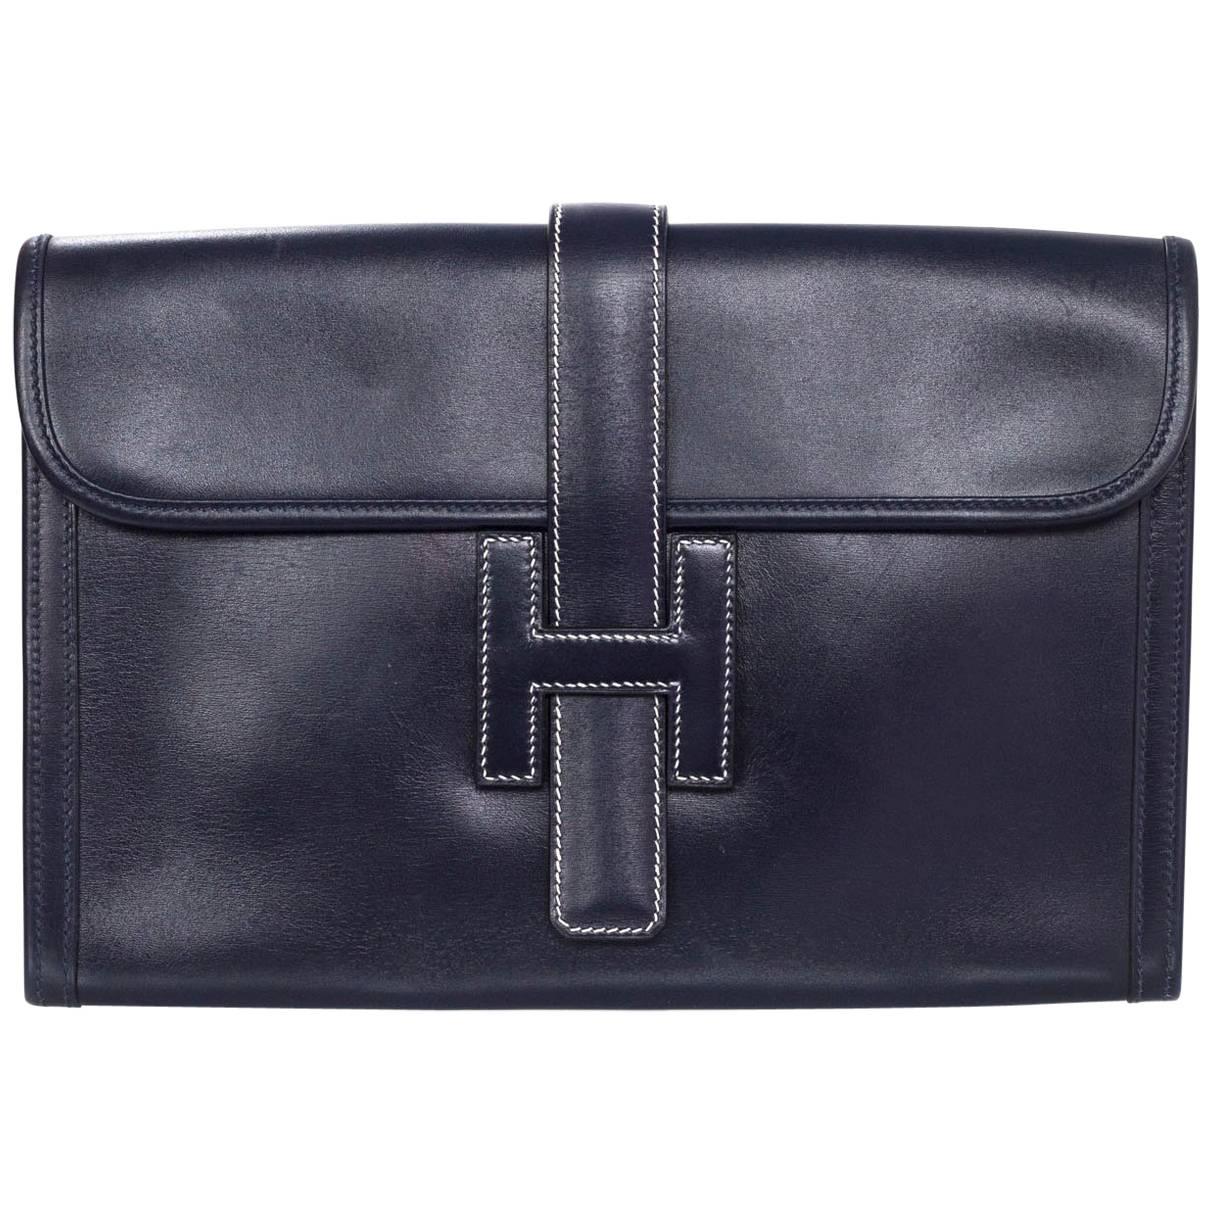 Hermes Navy Leather Jige H PM 29cm Clutch Bag